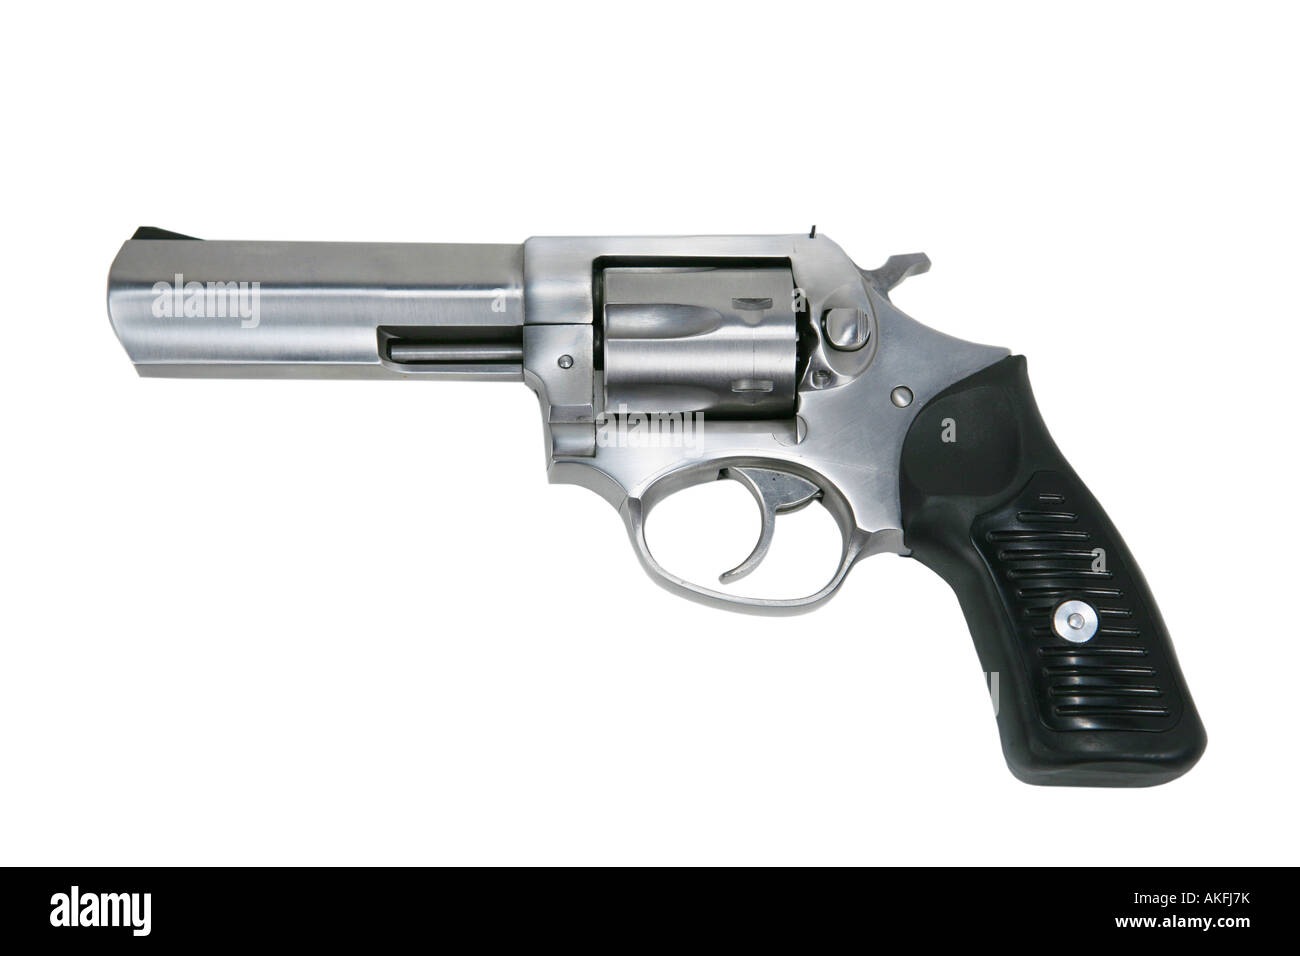 22 caliber pistol gun isolated on white background Stock Photo